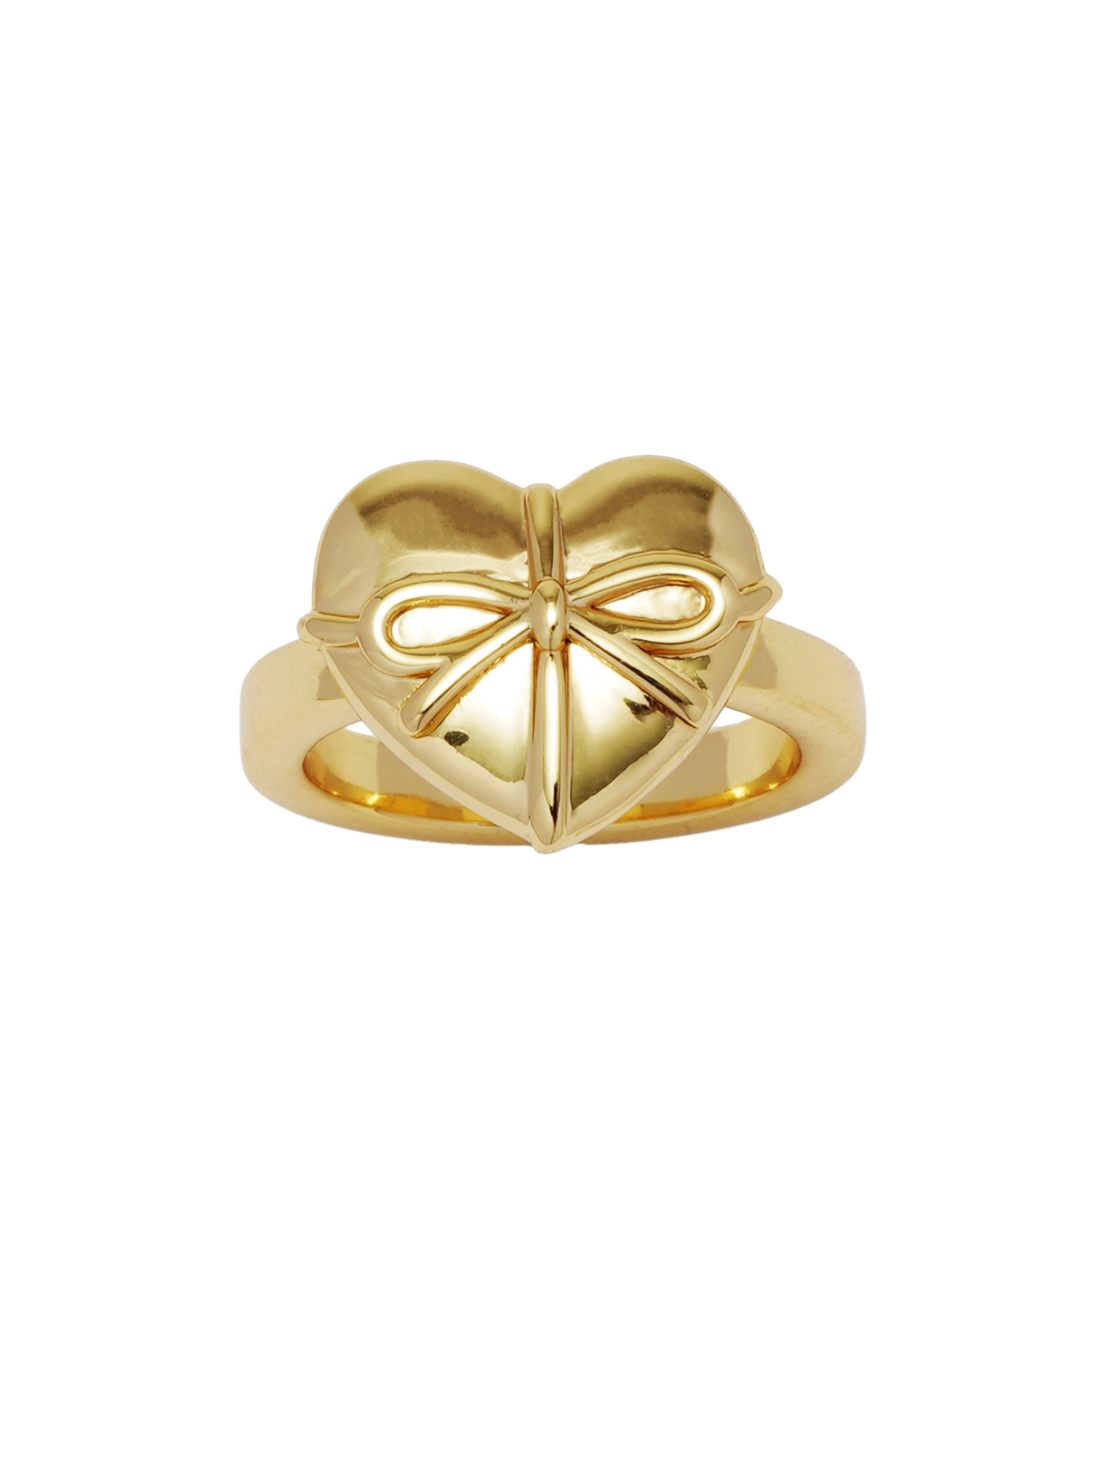 ✶ Restock ✶ Present ribbon ring#11